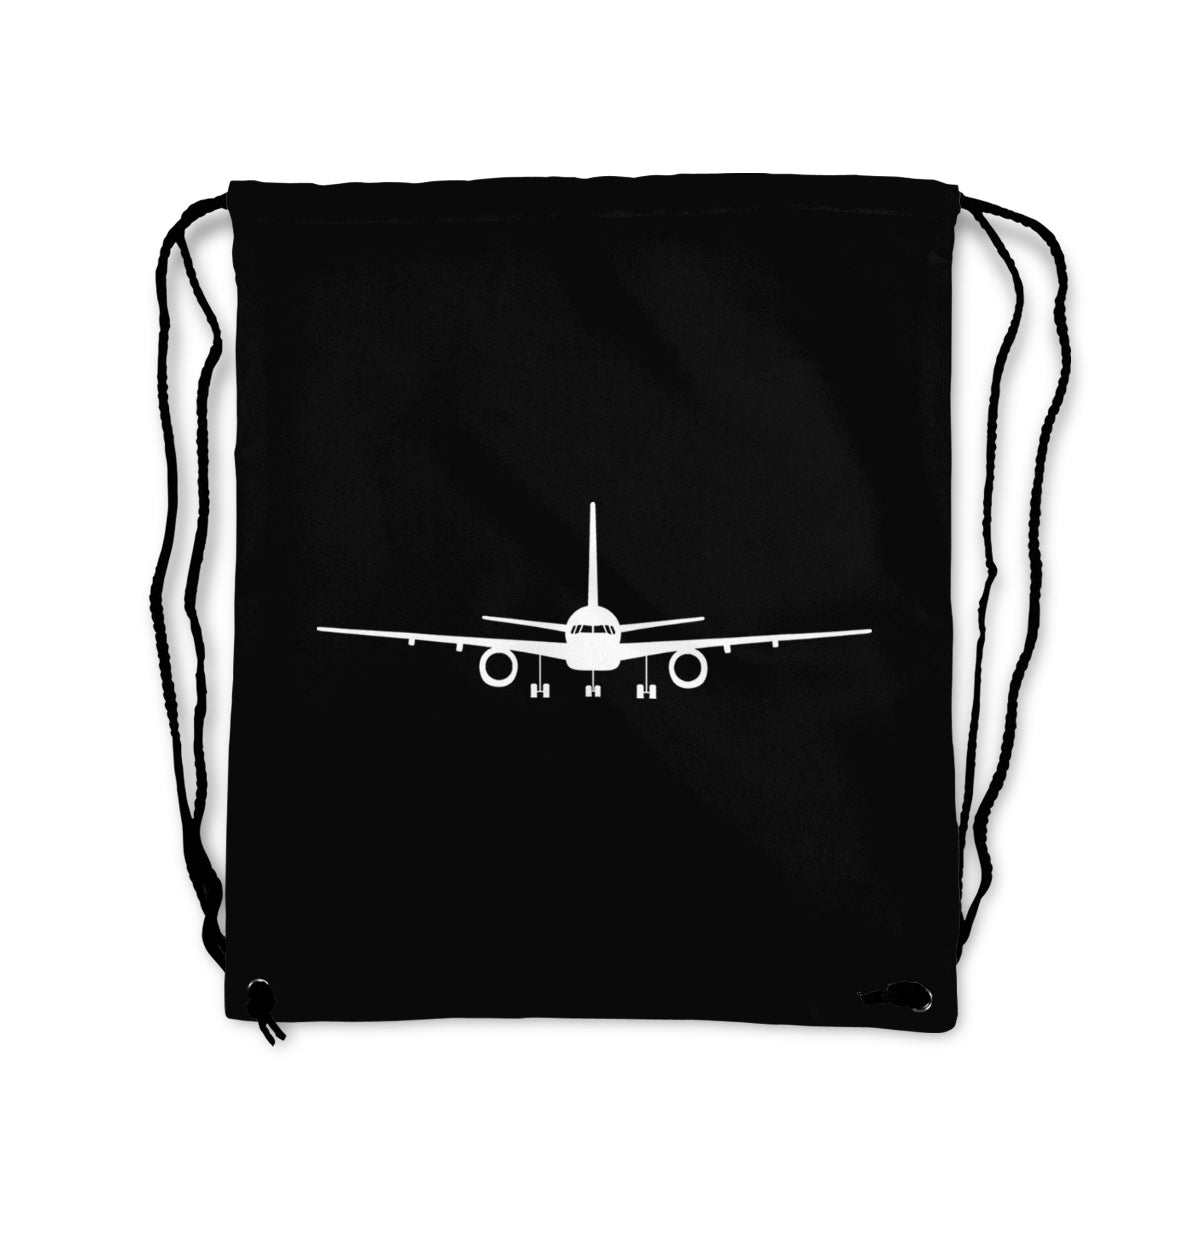 Boeing 757 Silhouette Designed Drawstring Bags